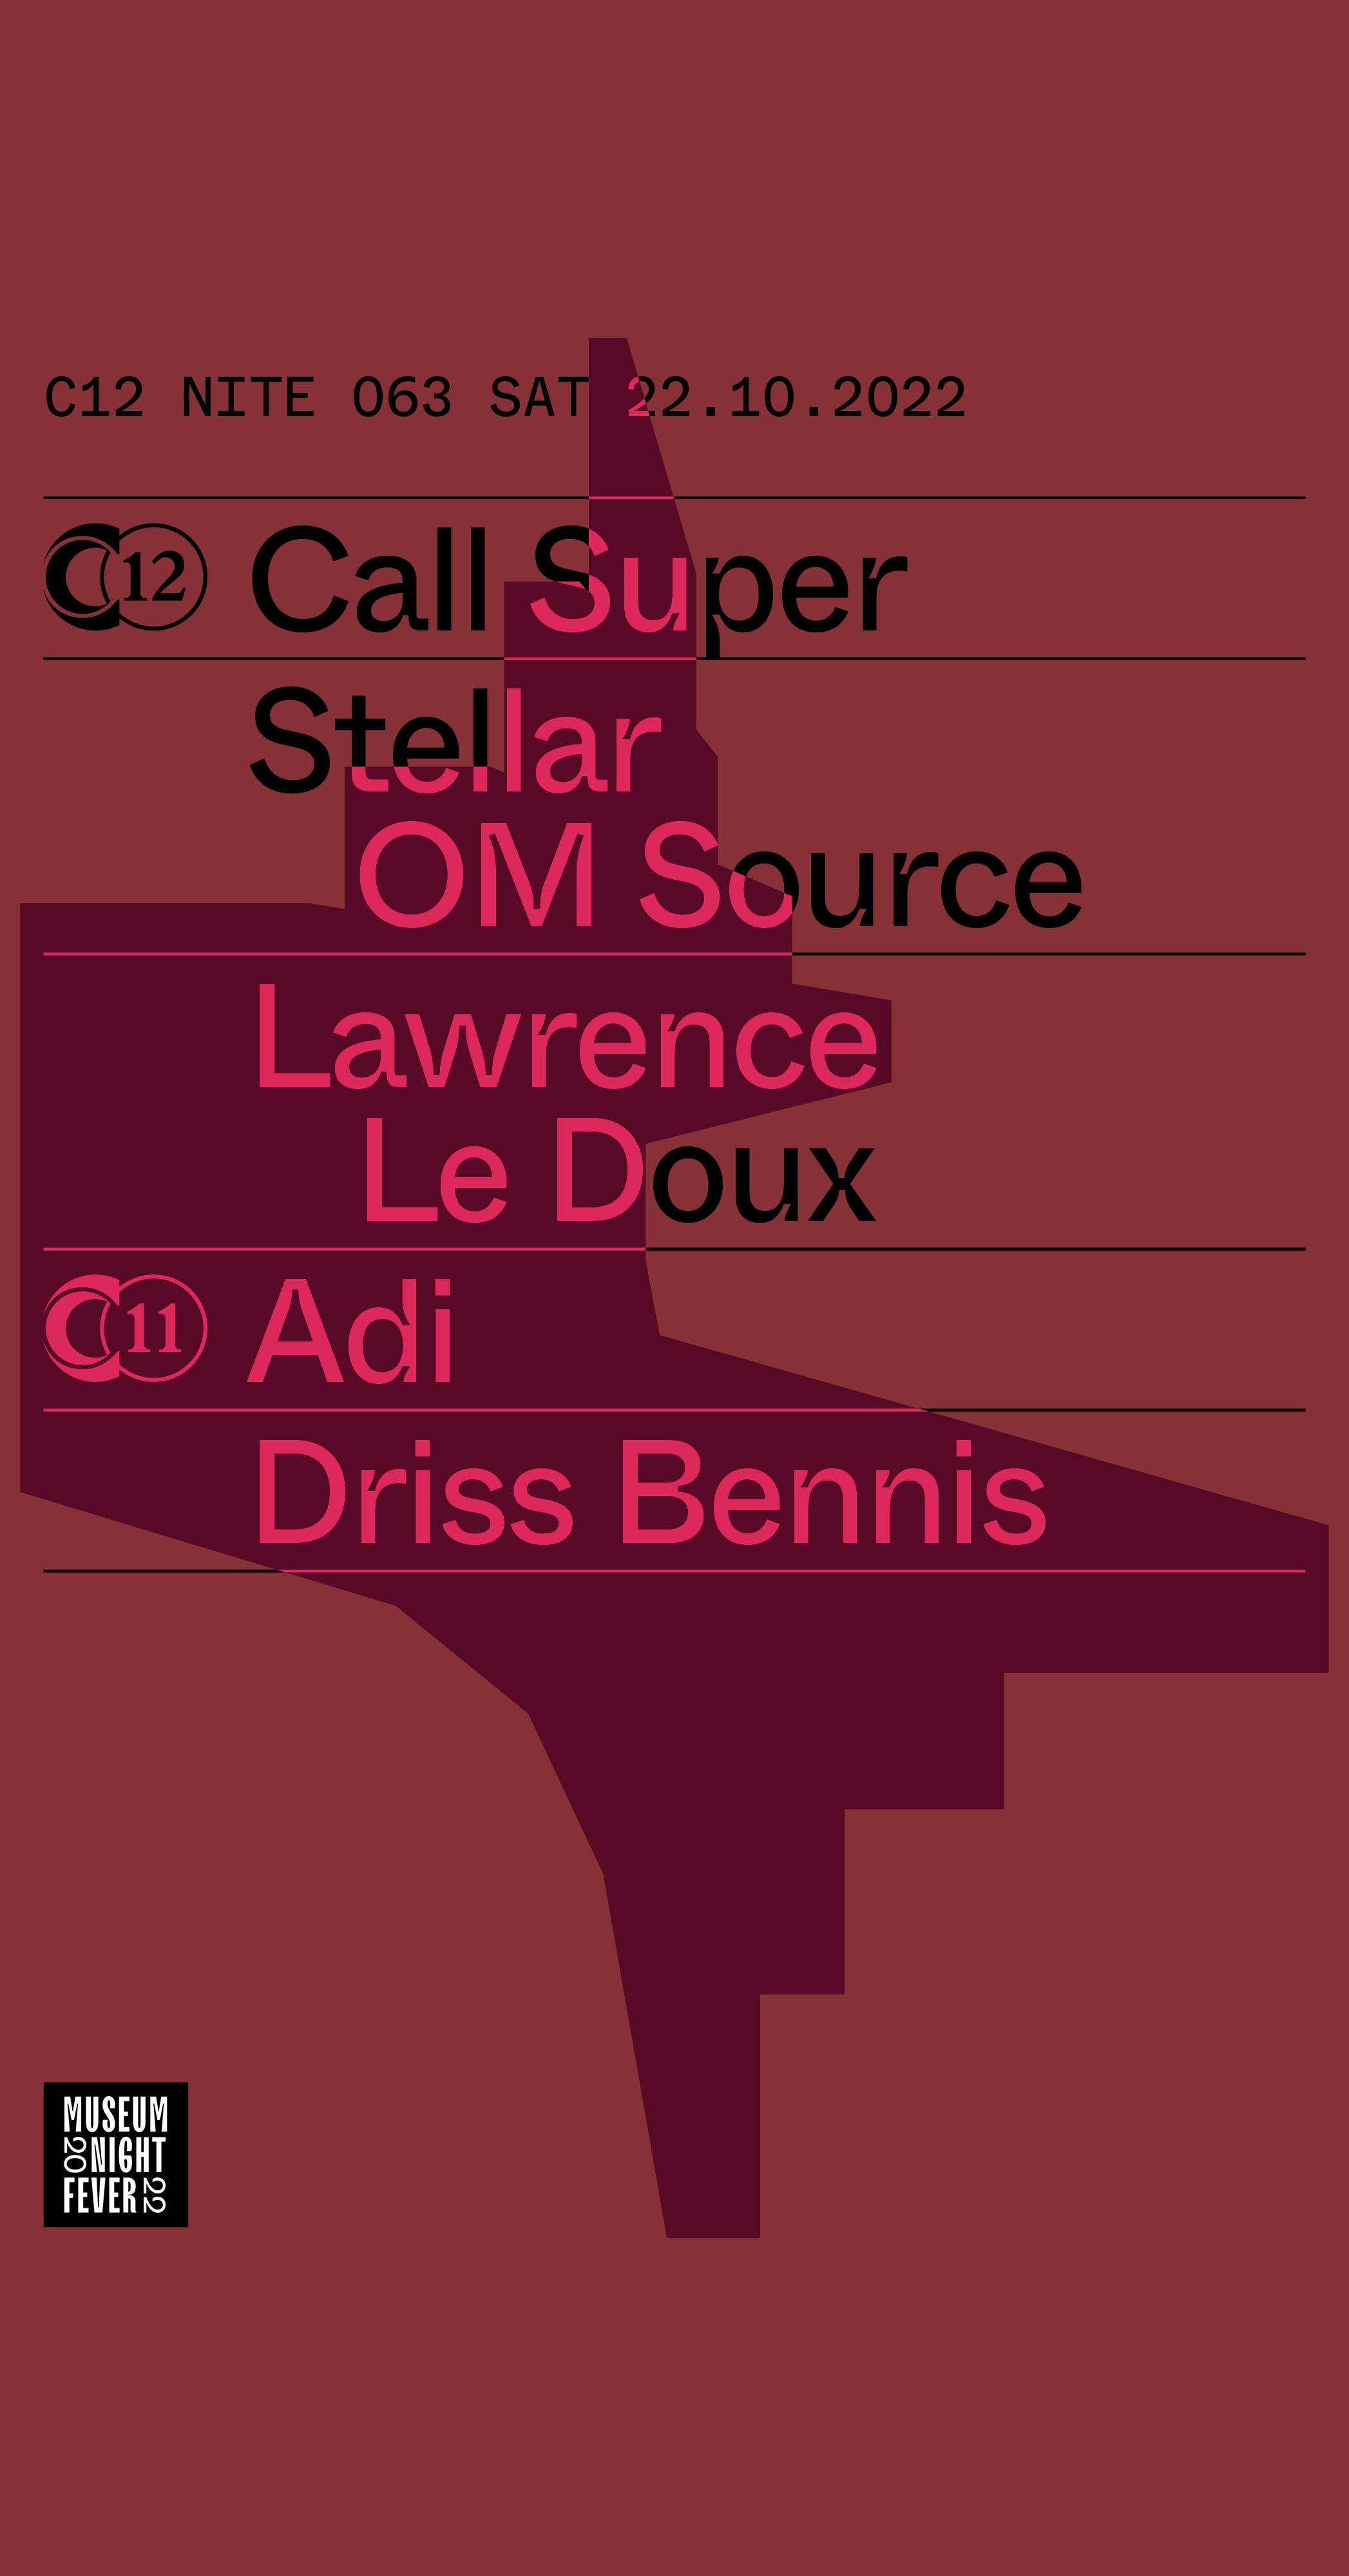 Call Super + Stellar OM Source + Lawrence Le Doux + Adi + Driss Bennis - フライヤー表